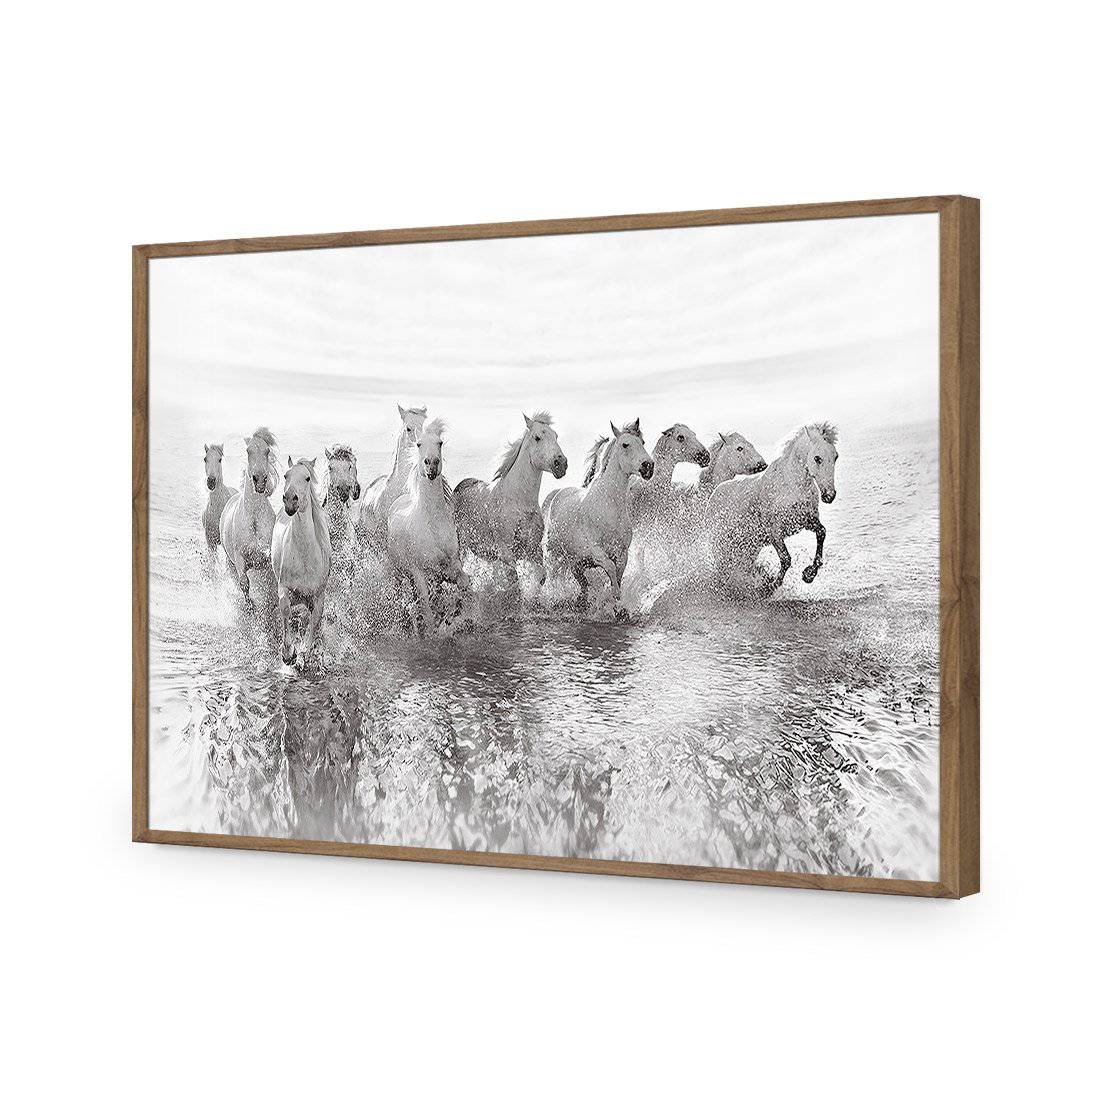 Illusion of Power by Roman Golubenko-Acrylic-Wall Art Design-Without Border-Acrylic - Natural Frame-45x30cm-Wall Art Designs